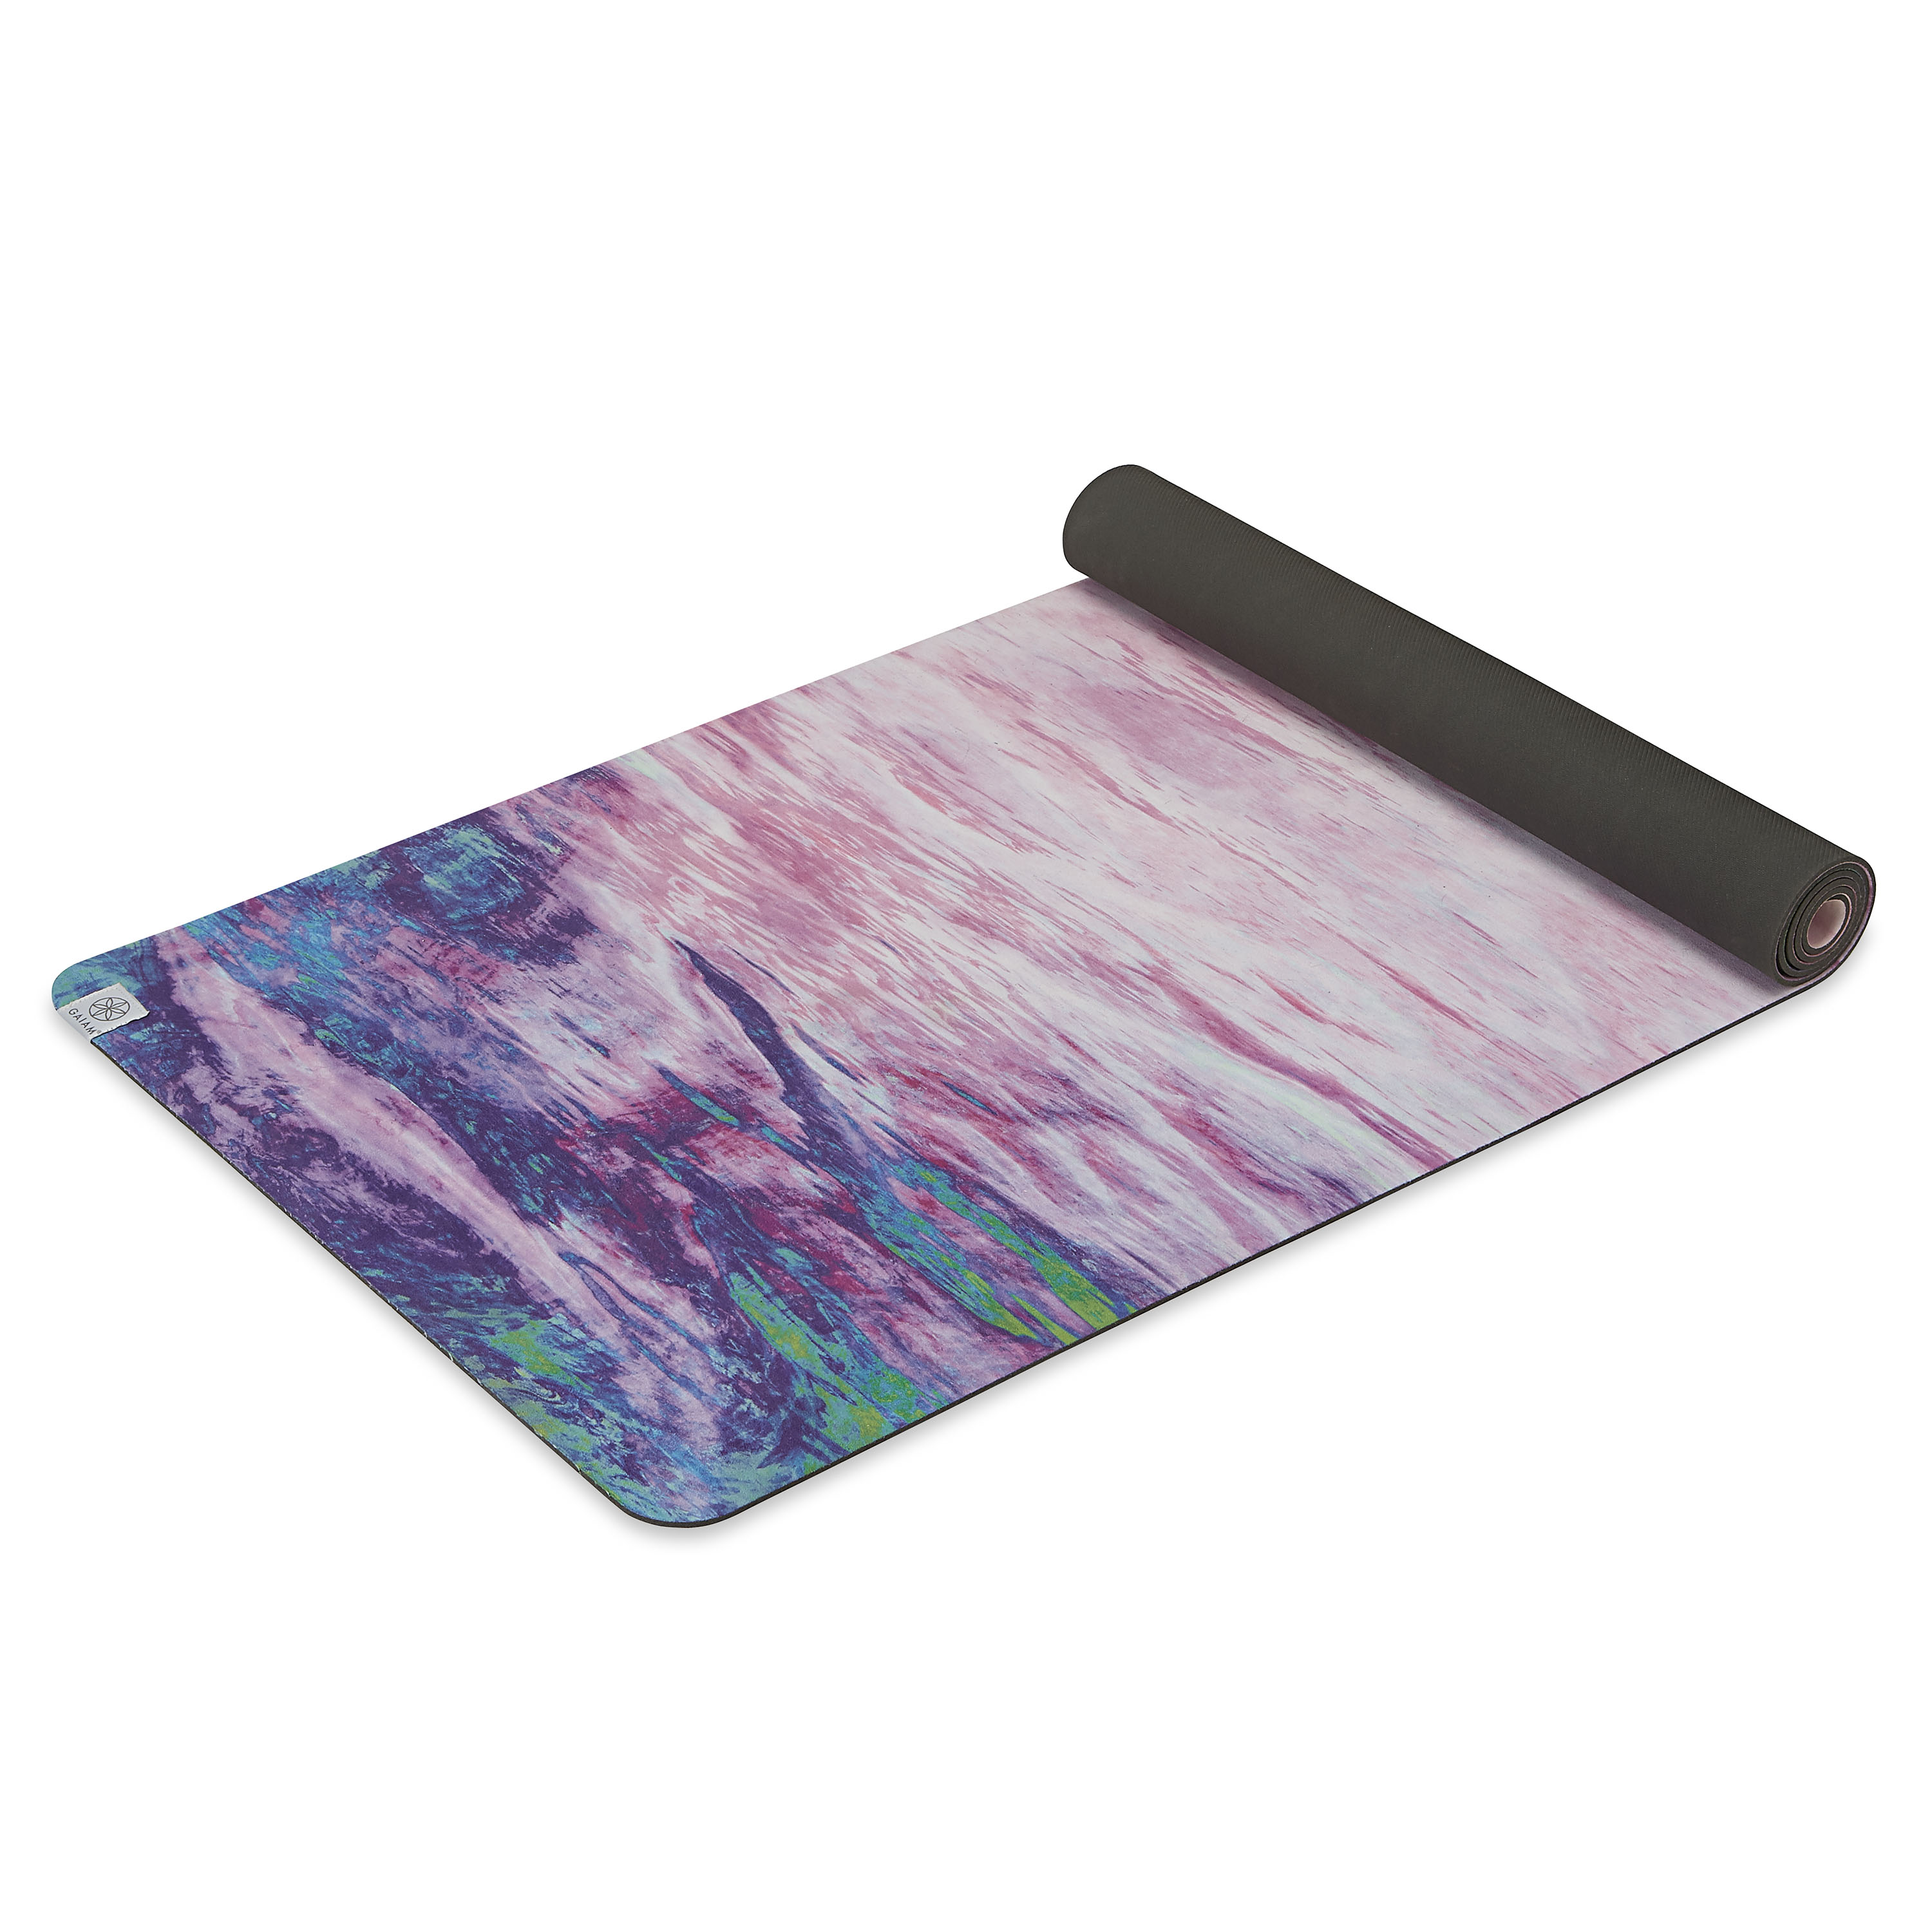 Gaiam Soft Grip Yoga Mat, Sunset, 4mm - image 3 of 4